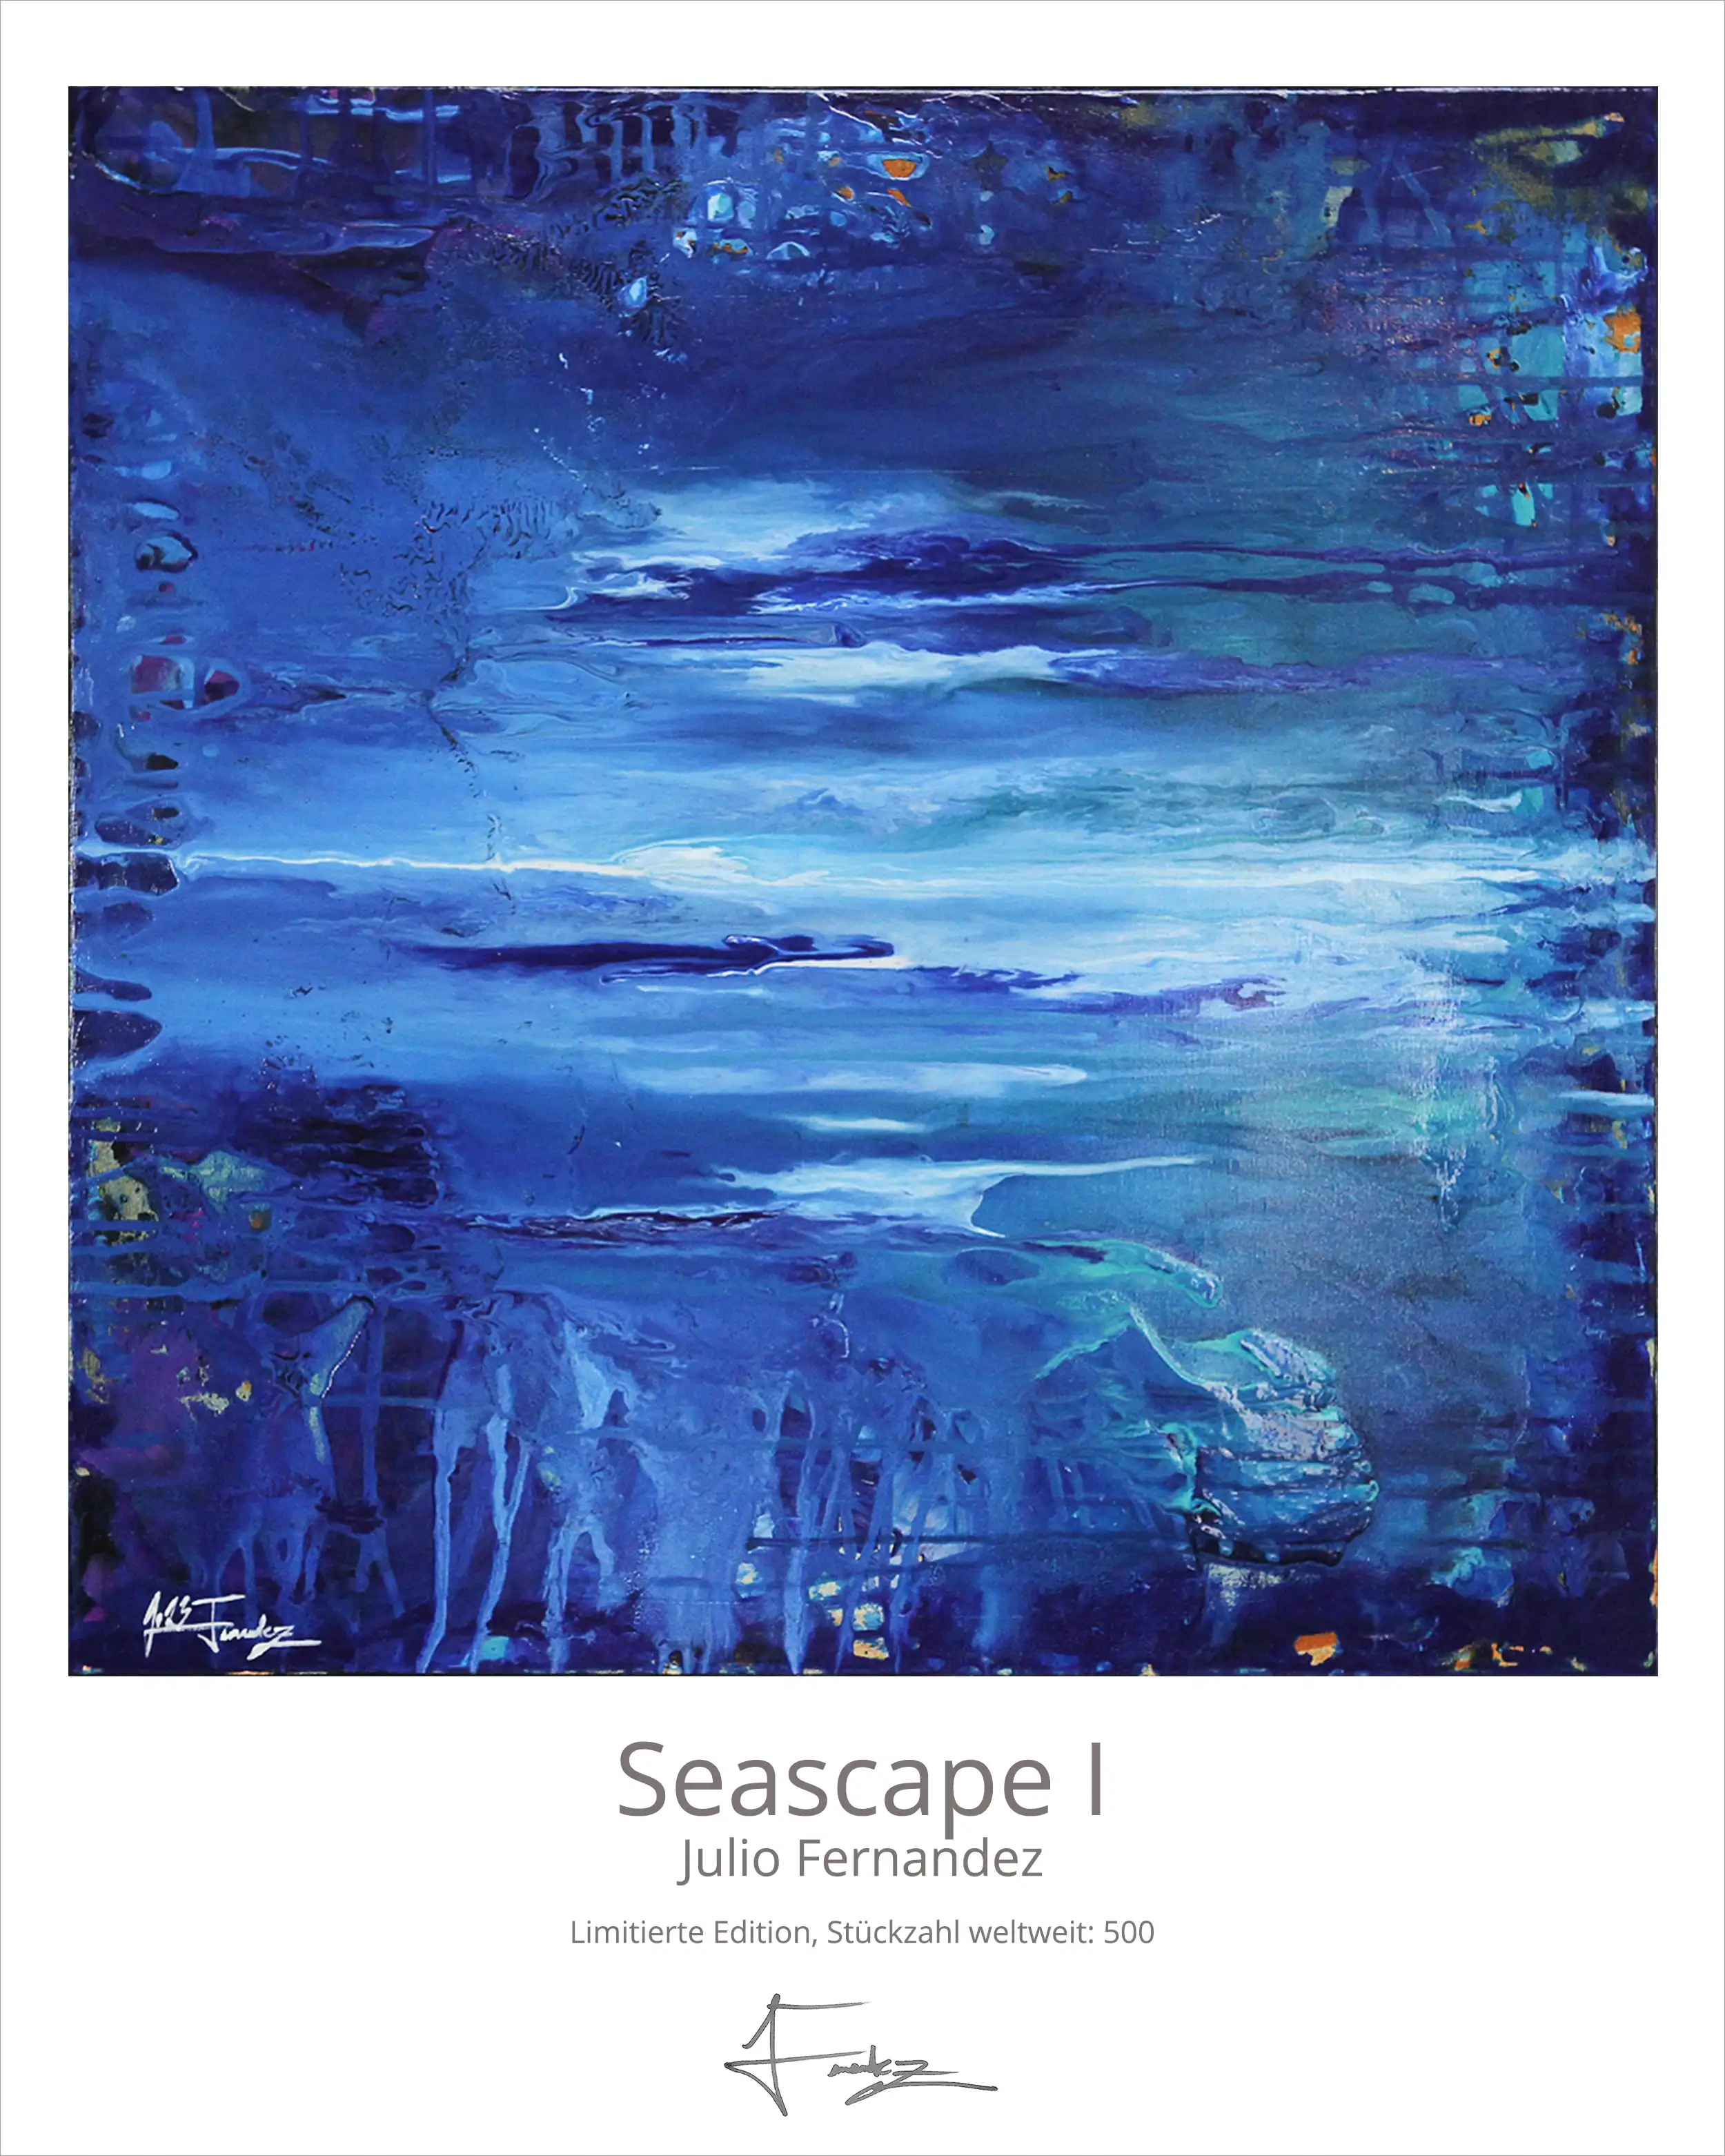 Limitierte Edition auf Papier, J. Fernandez "Seascape I", Fineartprint, Kollektion E&K